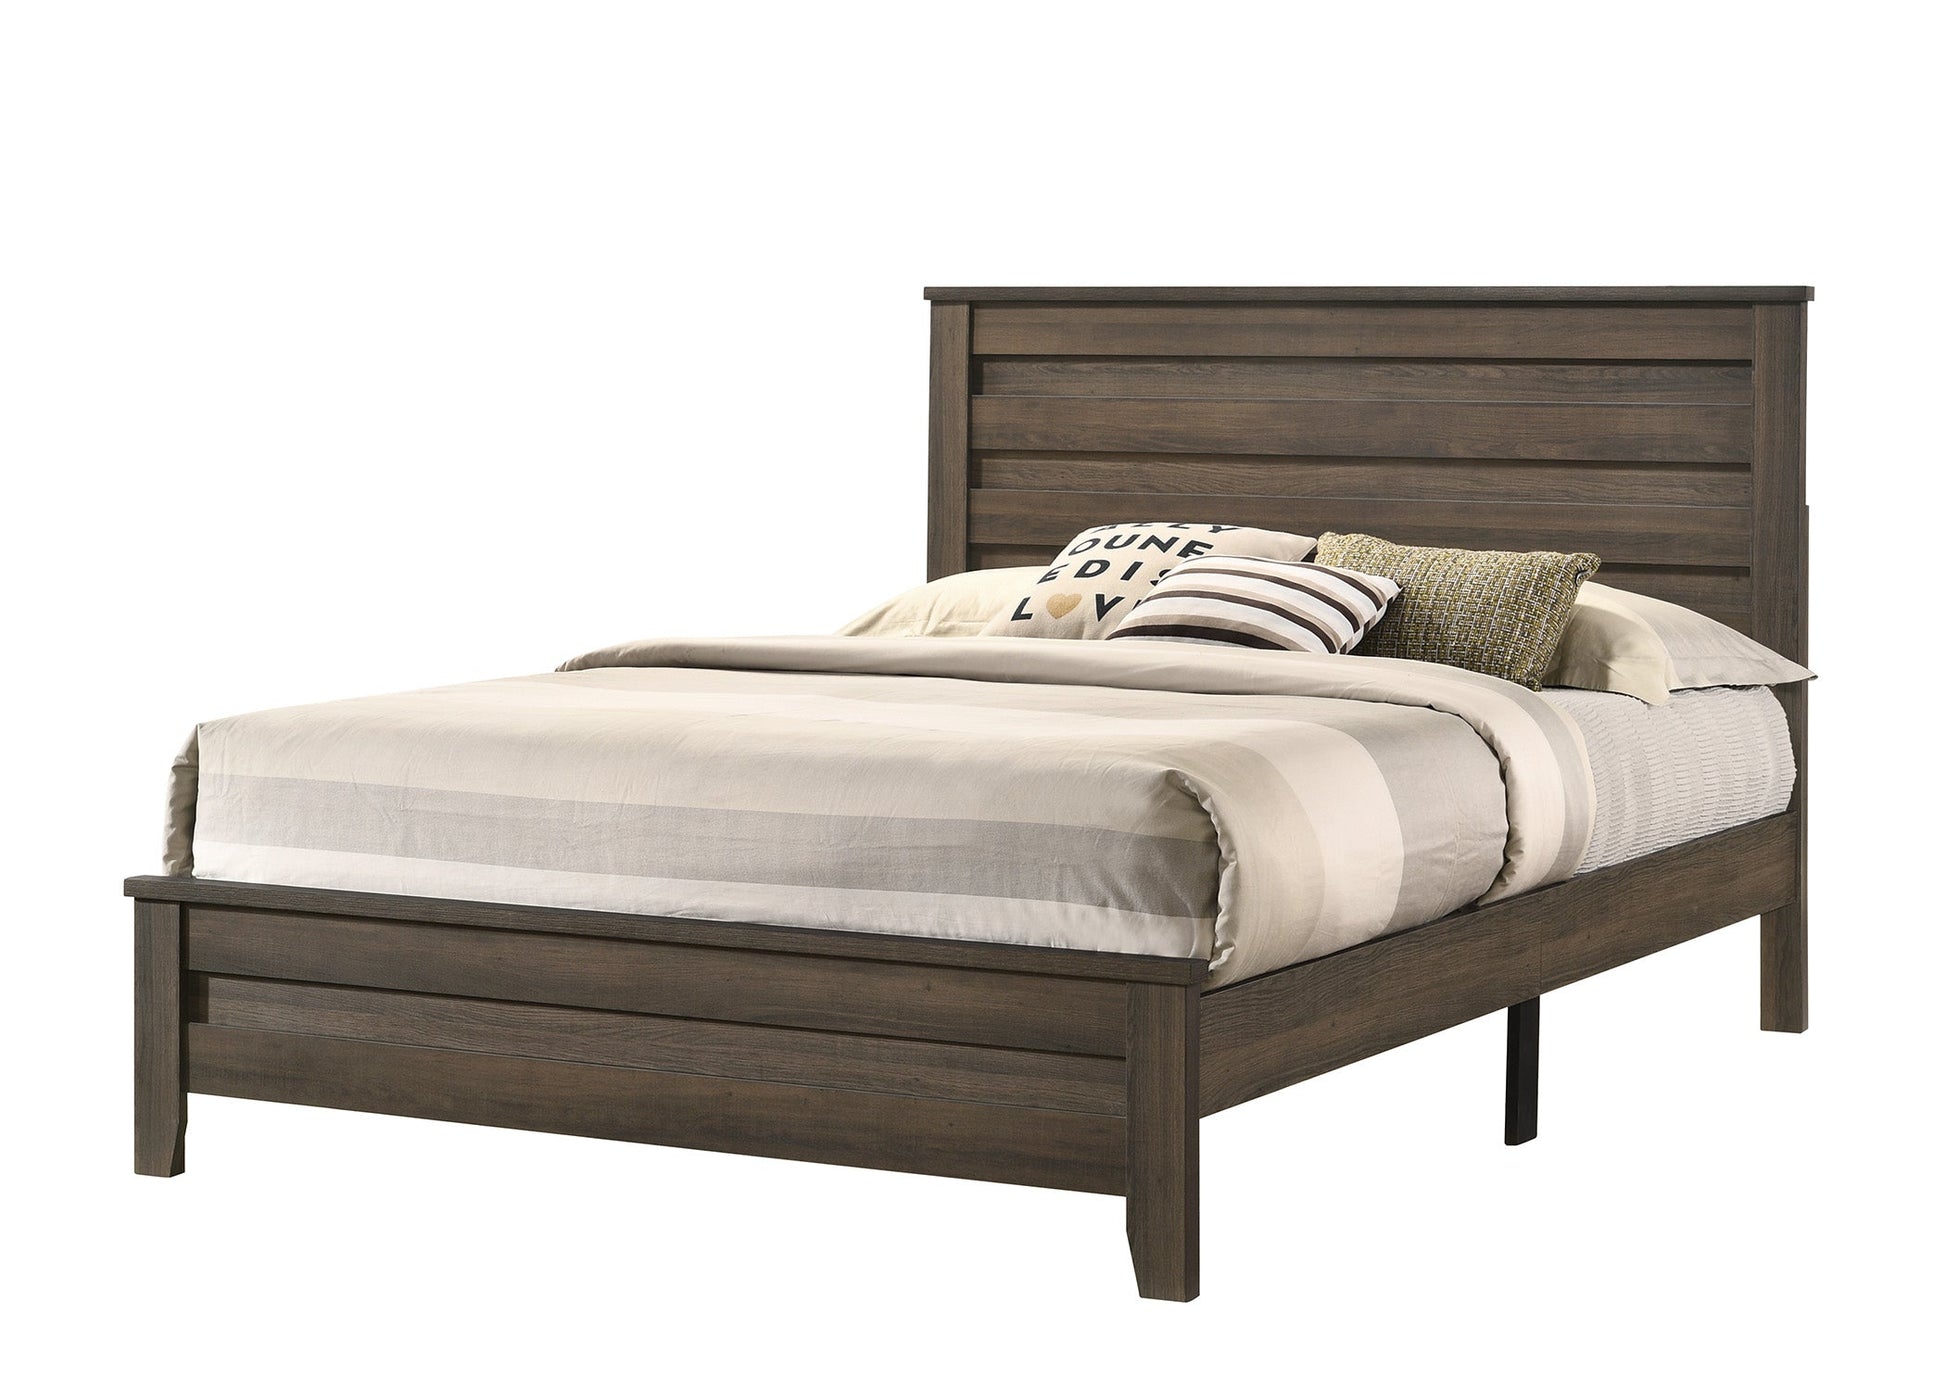 Marley Brown Finish Sleek And Modern Wood Platform Bedroom Set